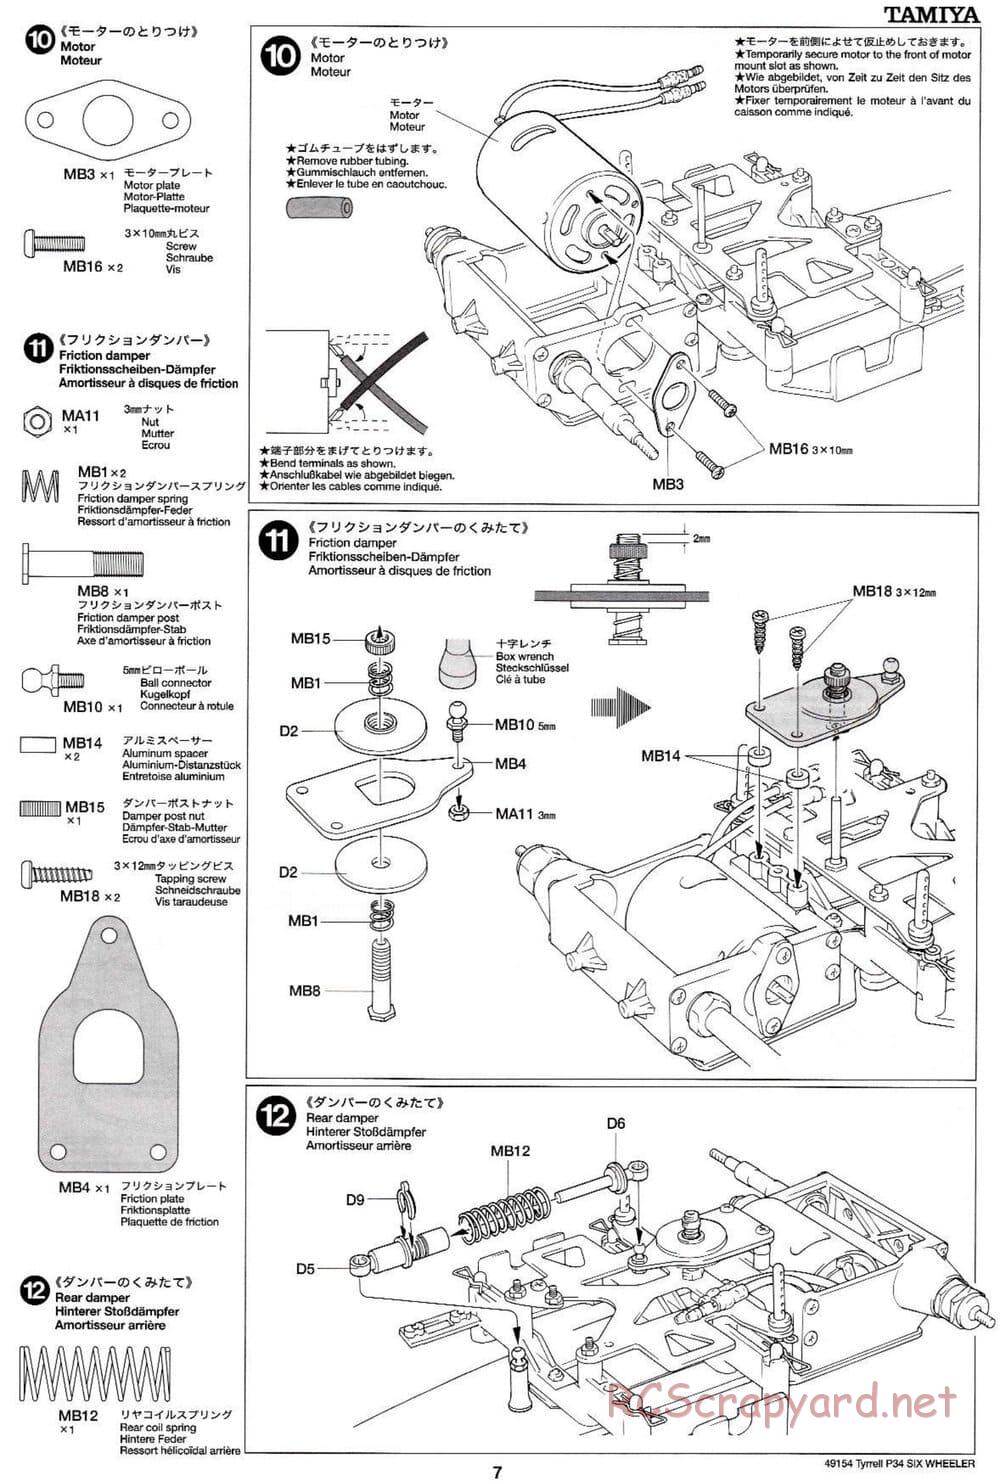 Tamiya - Tyrrell P34 Six Wheeler - F103-6W Chassis - Manual - Page 7